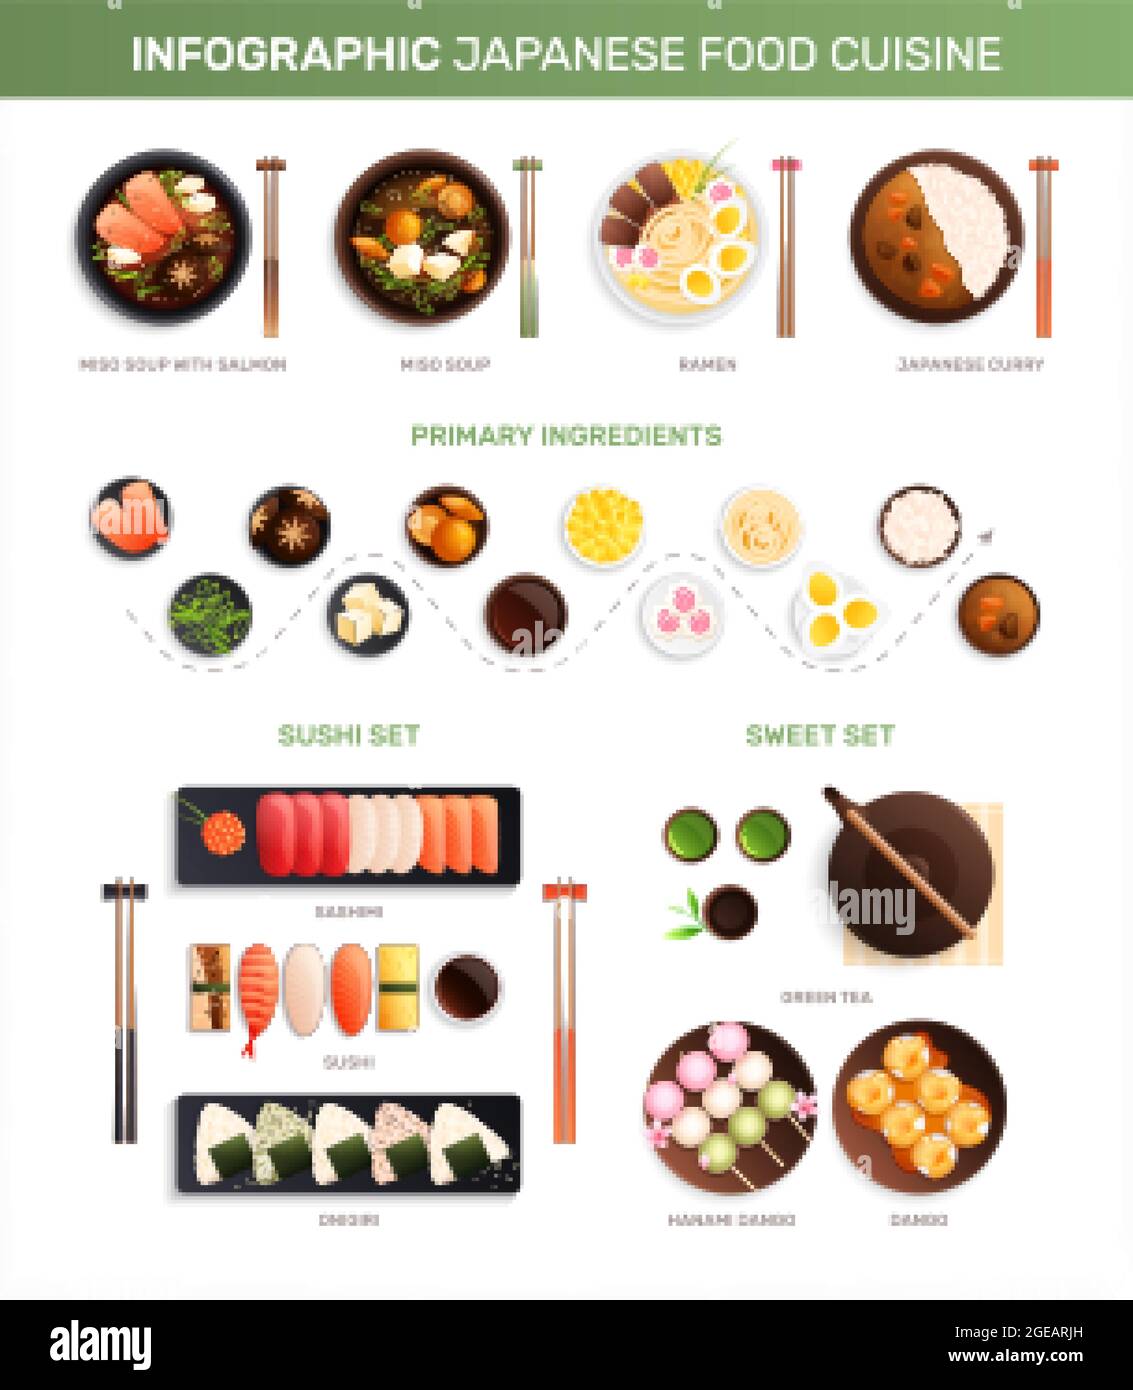 Cocina japonesa tradicional infografía plana con imágenes aisladas de  platos servidos con leyendas de texto editables ilustración vectorial  Imagen Vector de stock - Alamy